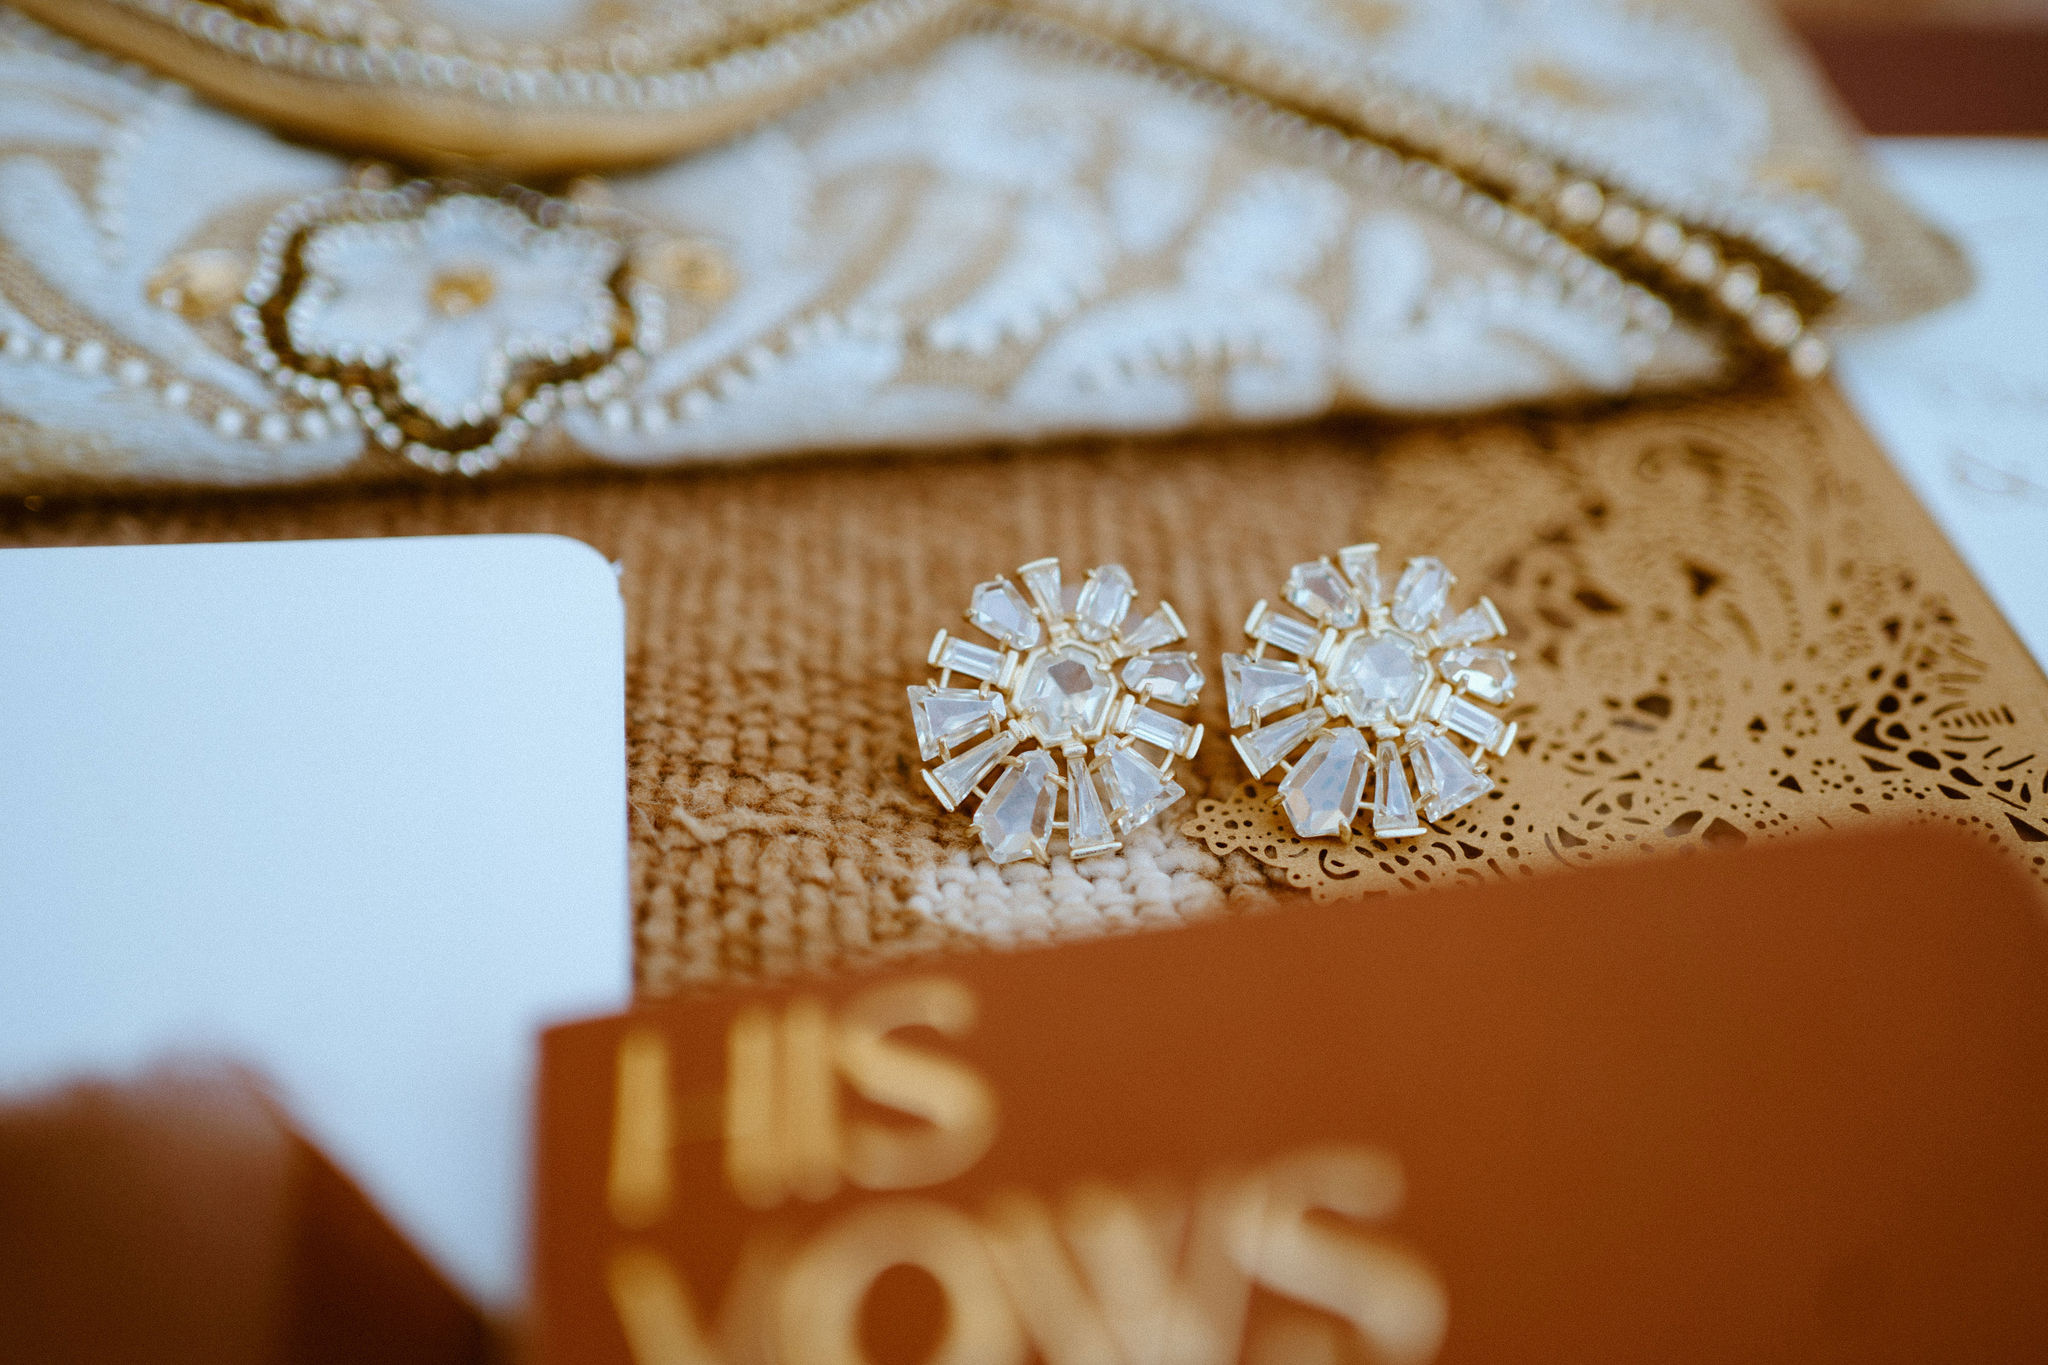 The brides wedding day diamond earrings.